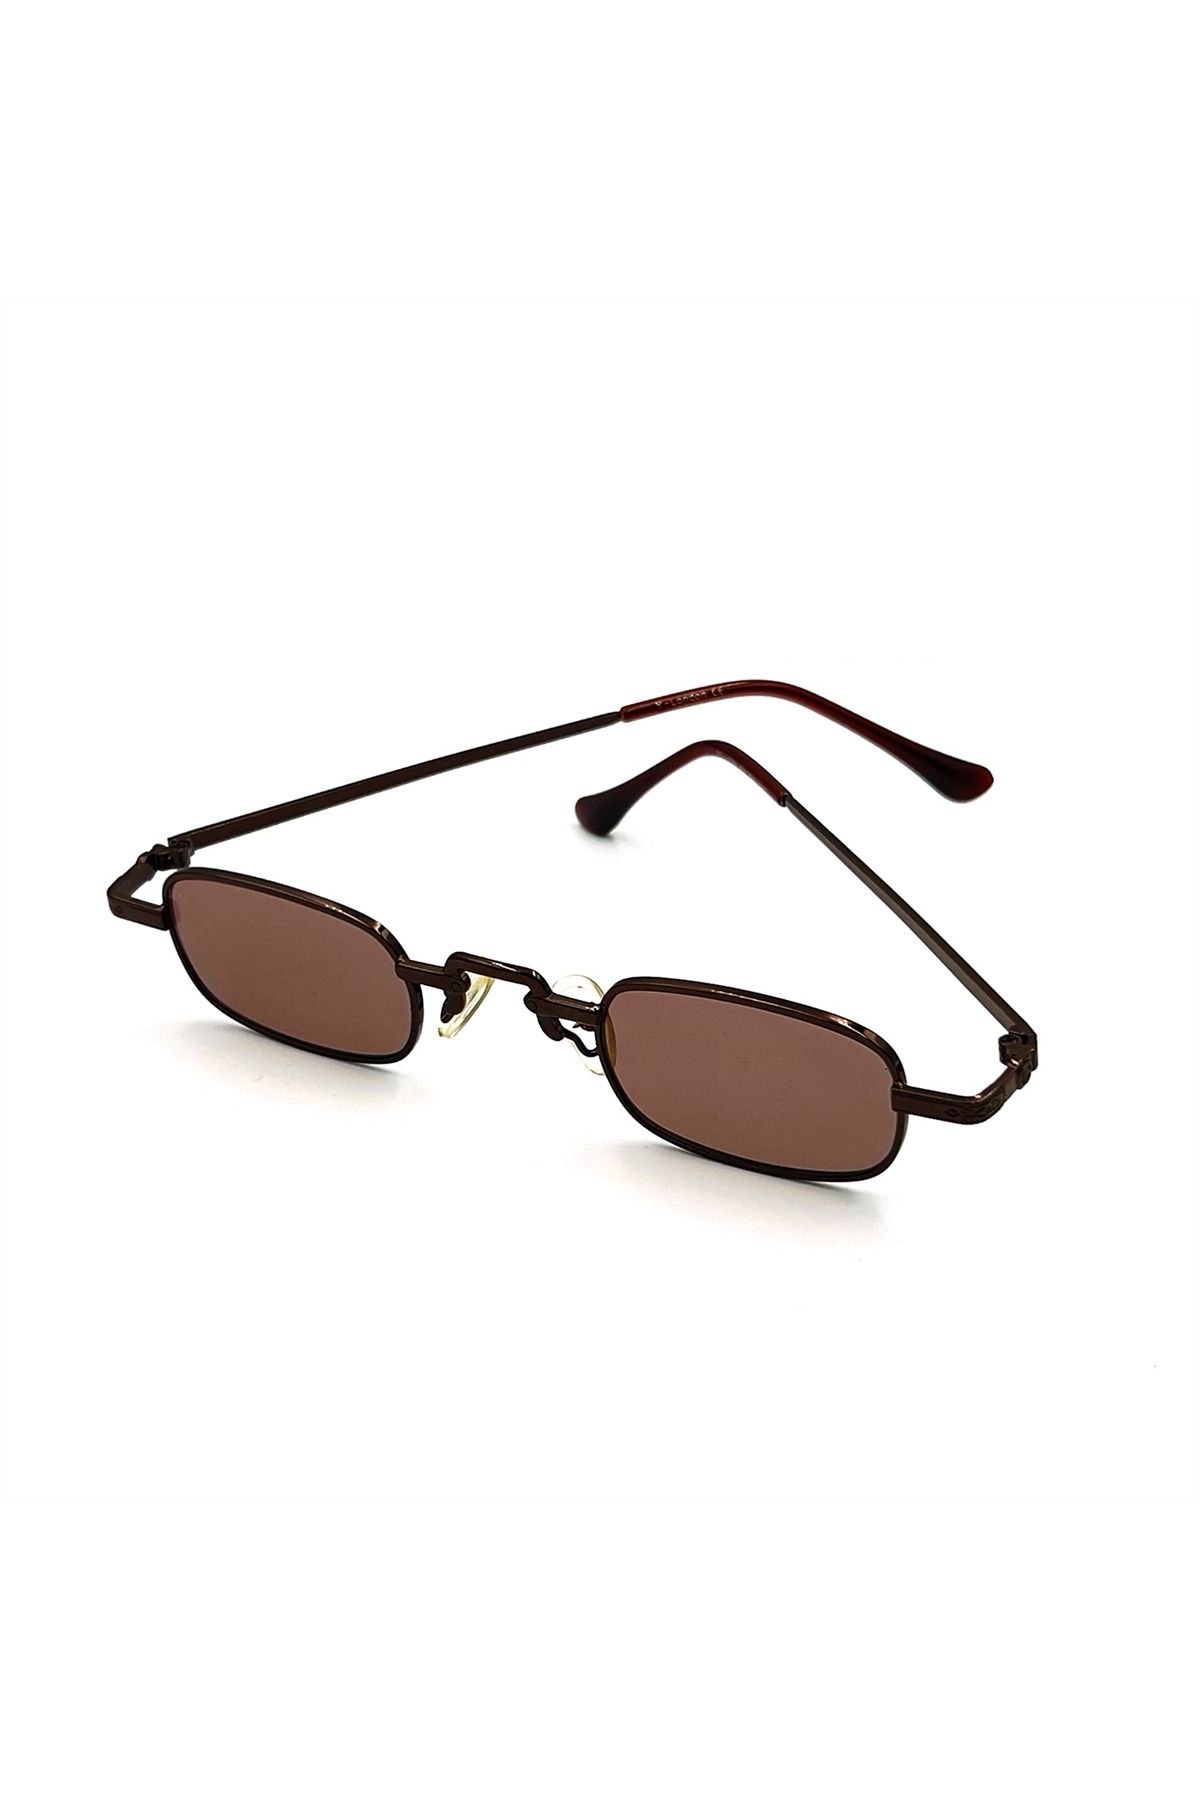 Vista Ottico Unisex Elegante Sunglasses Güneş Gözlüğü Kahverengi